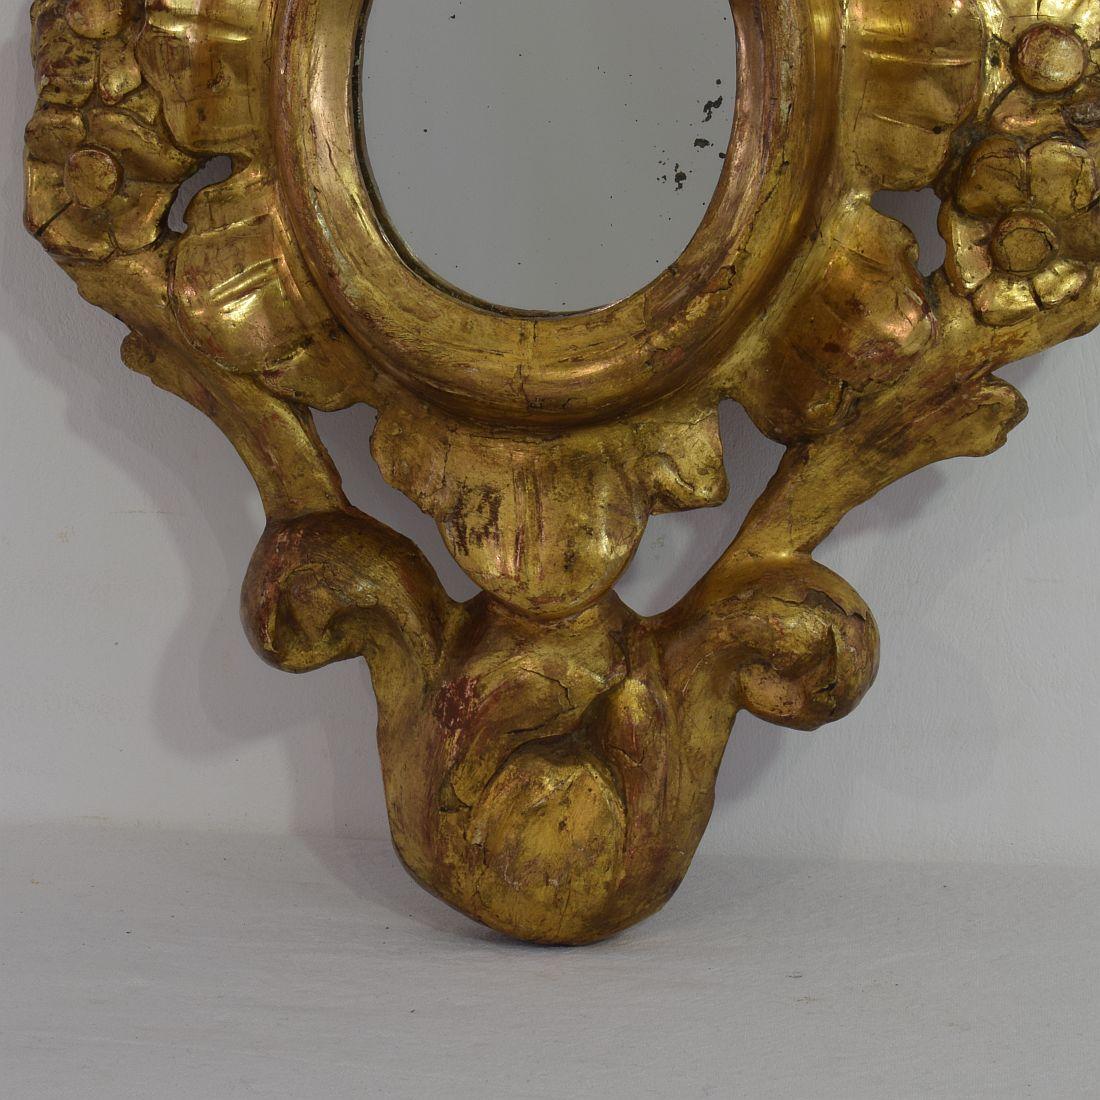 18th Century and Earlier Small 18th Century Italian Giltwood Baroque Mirror